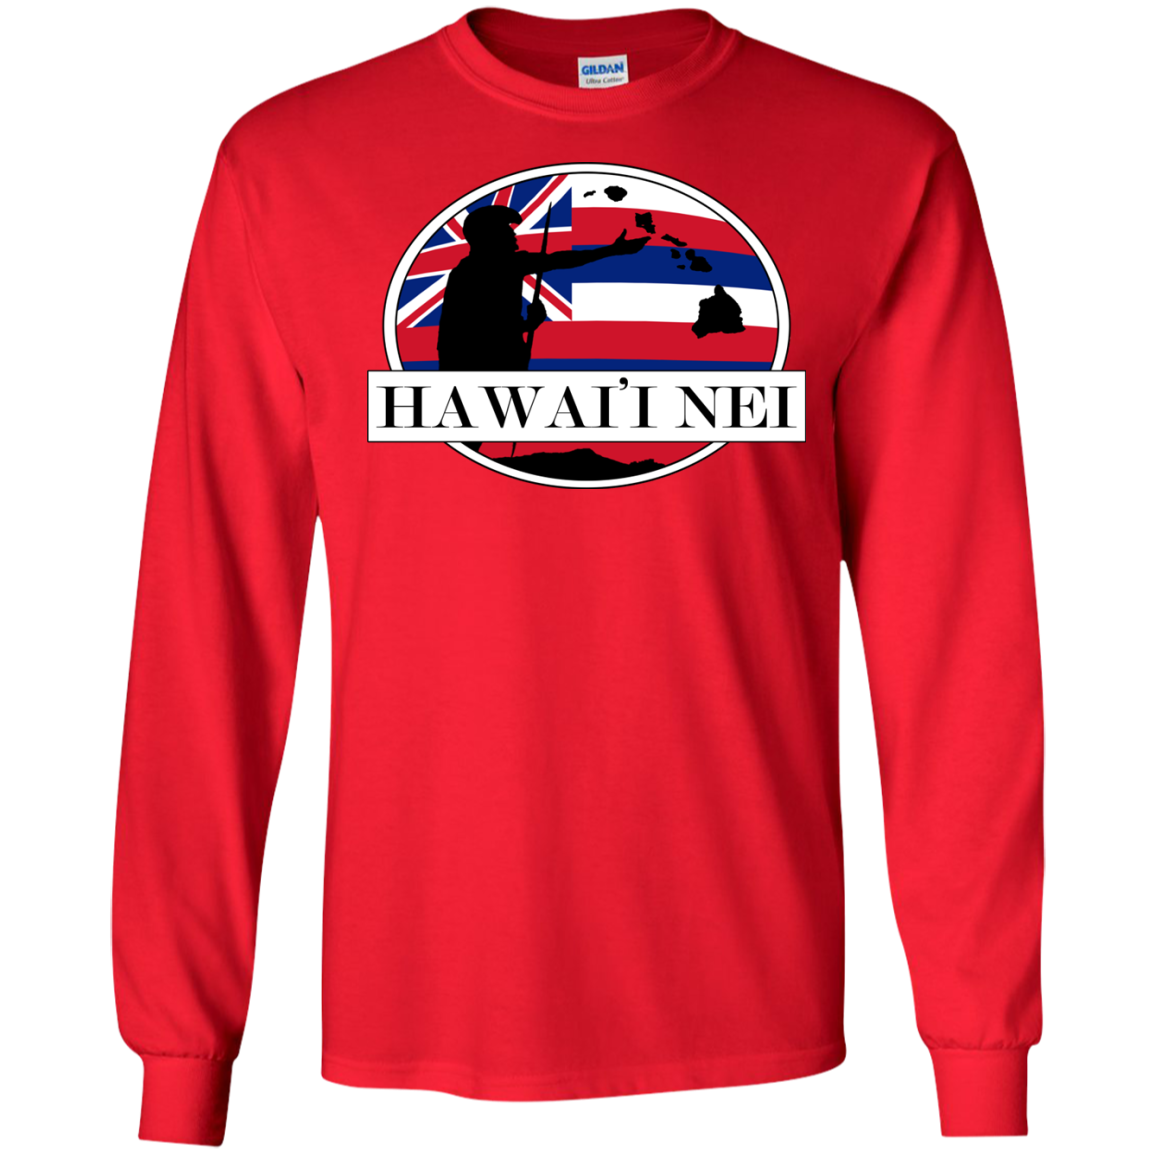 Hawai'i Nei King Kamehameha LS Ultra Cotton Tshirt - Hawaii Nei All Day